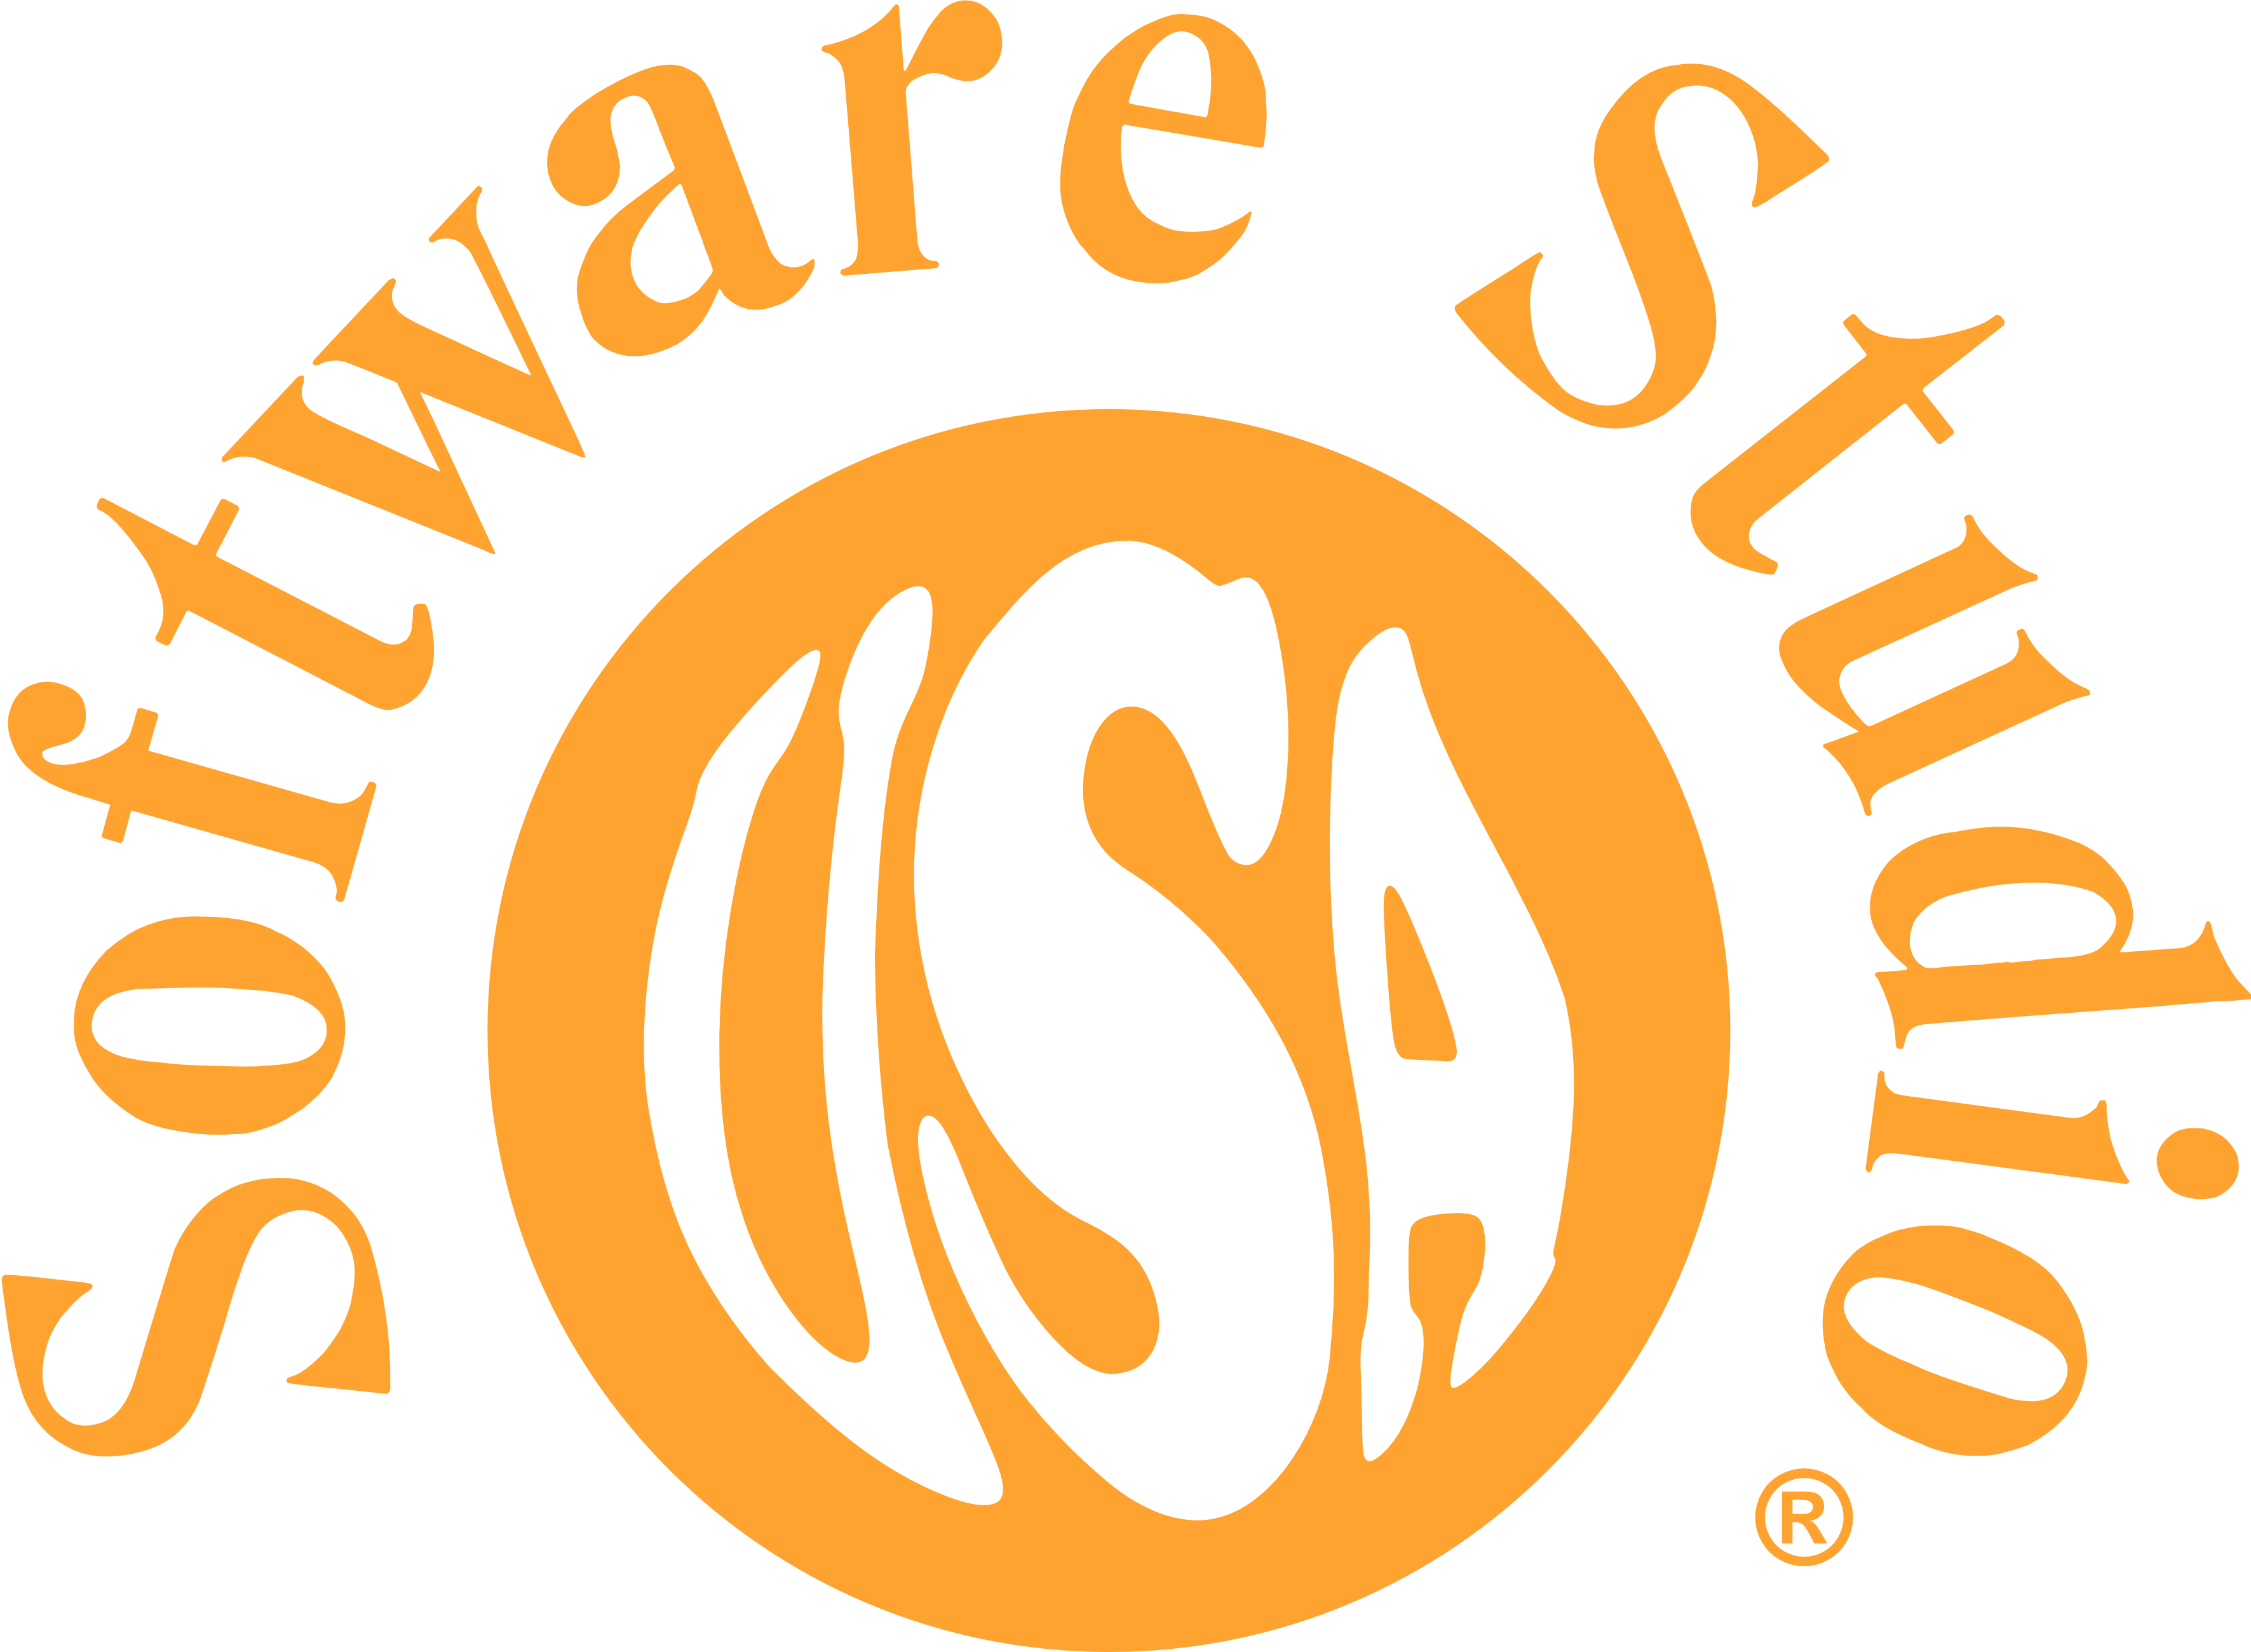 Software Studio USA